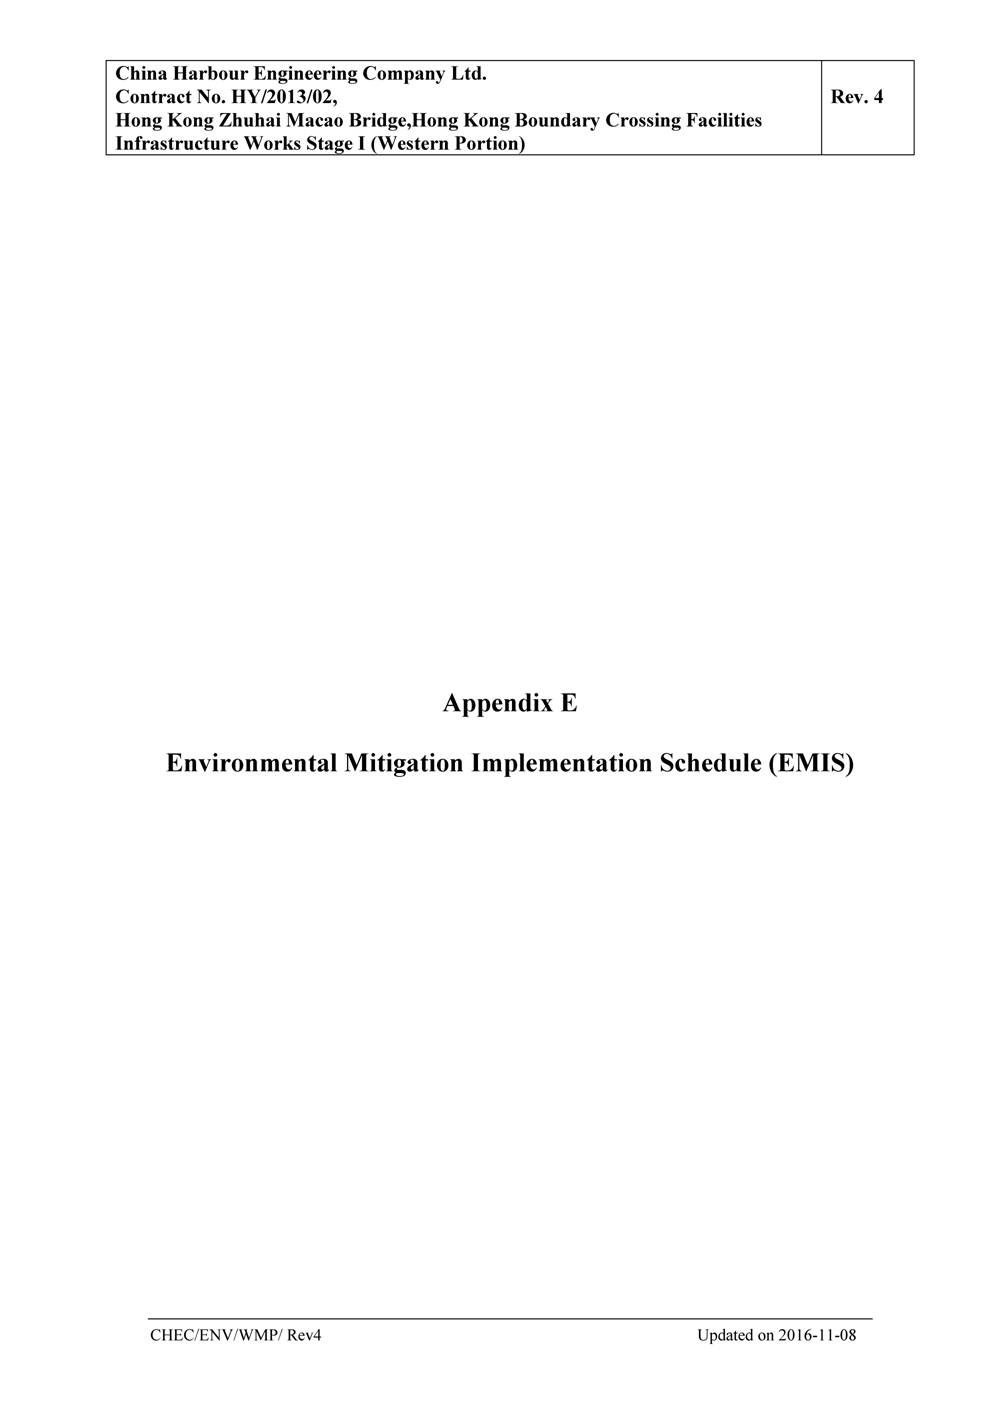 Waste Management Plan (Rev.4)_頁面_54.png